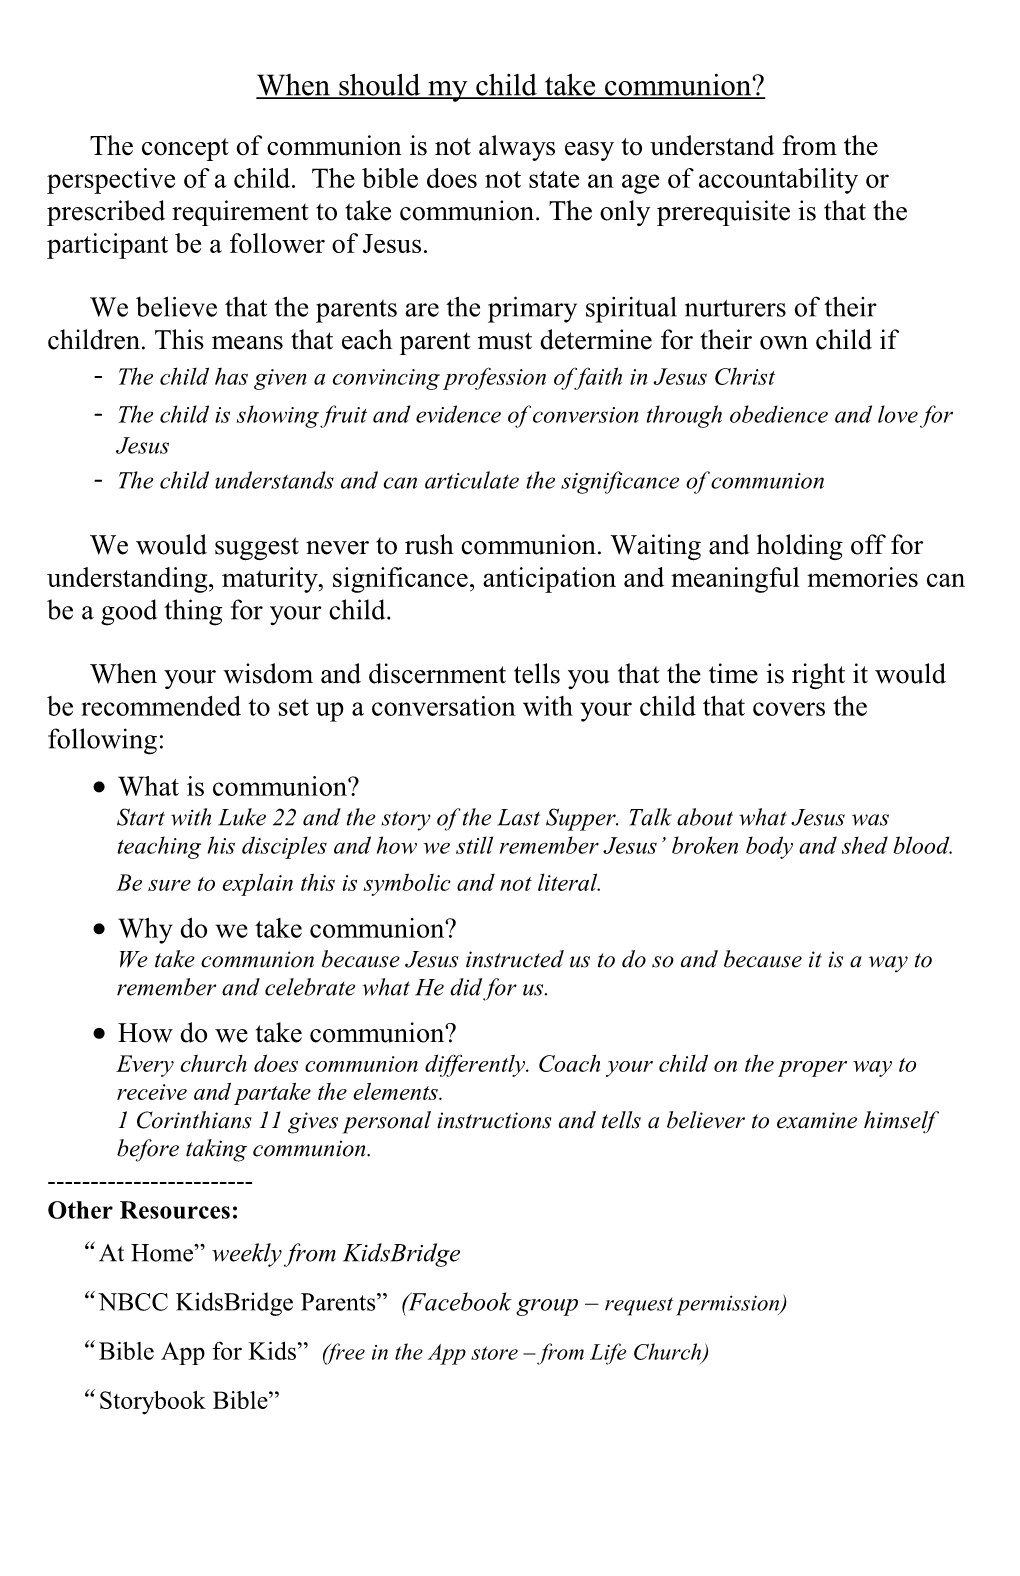 When Should My Child Take Communion?